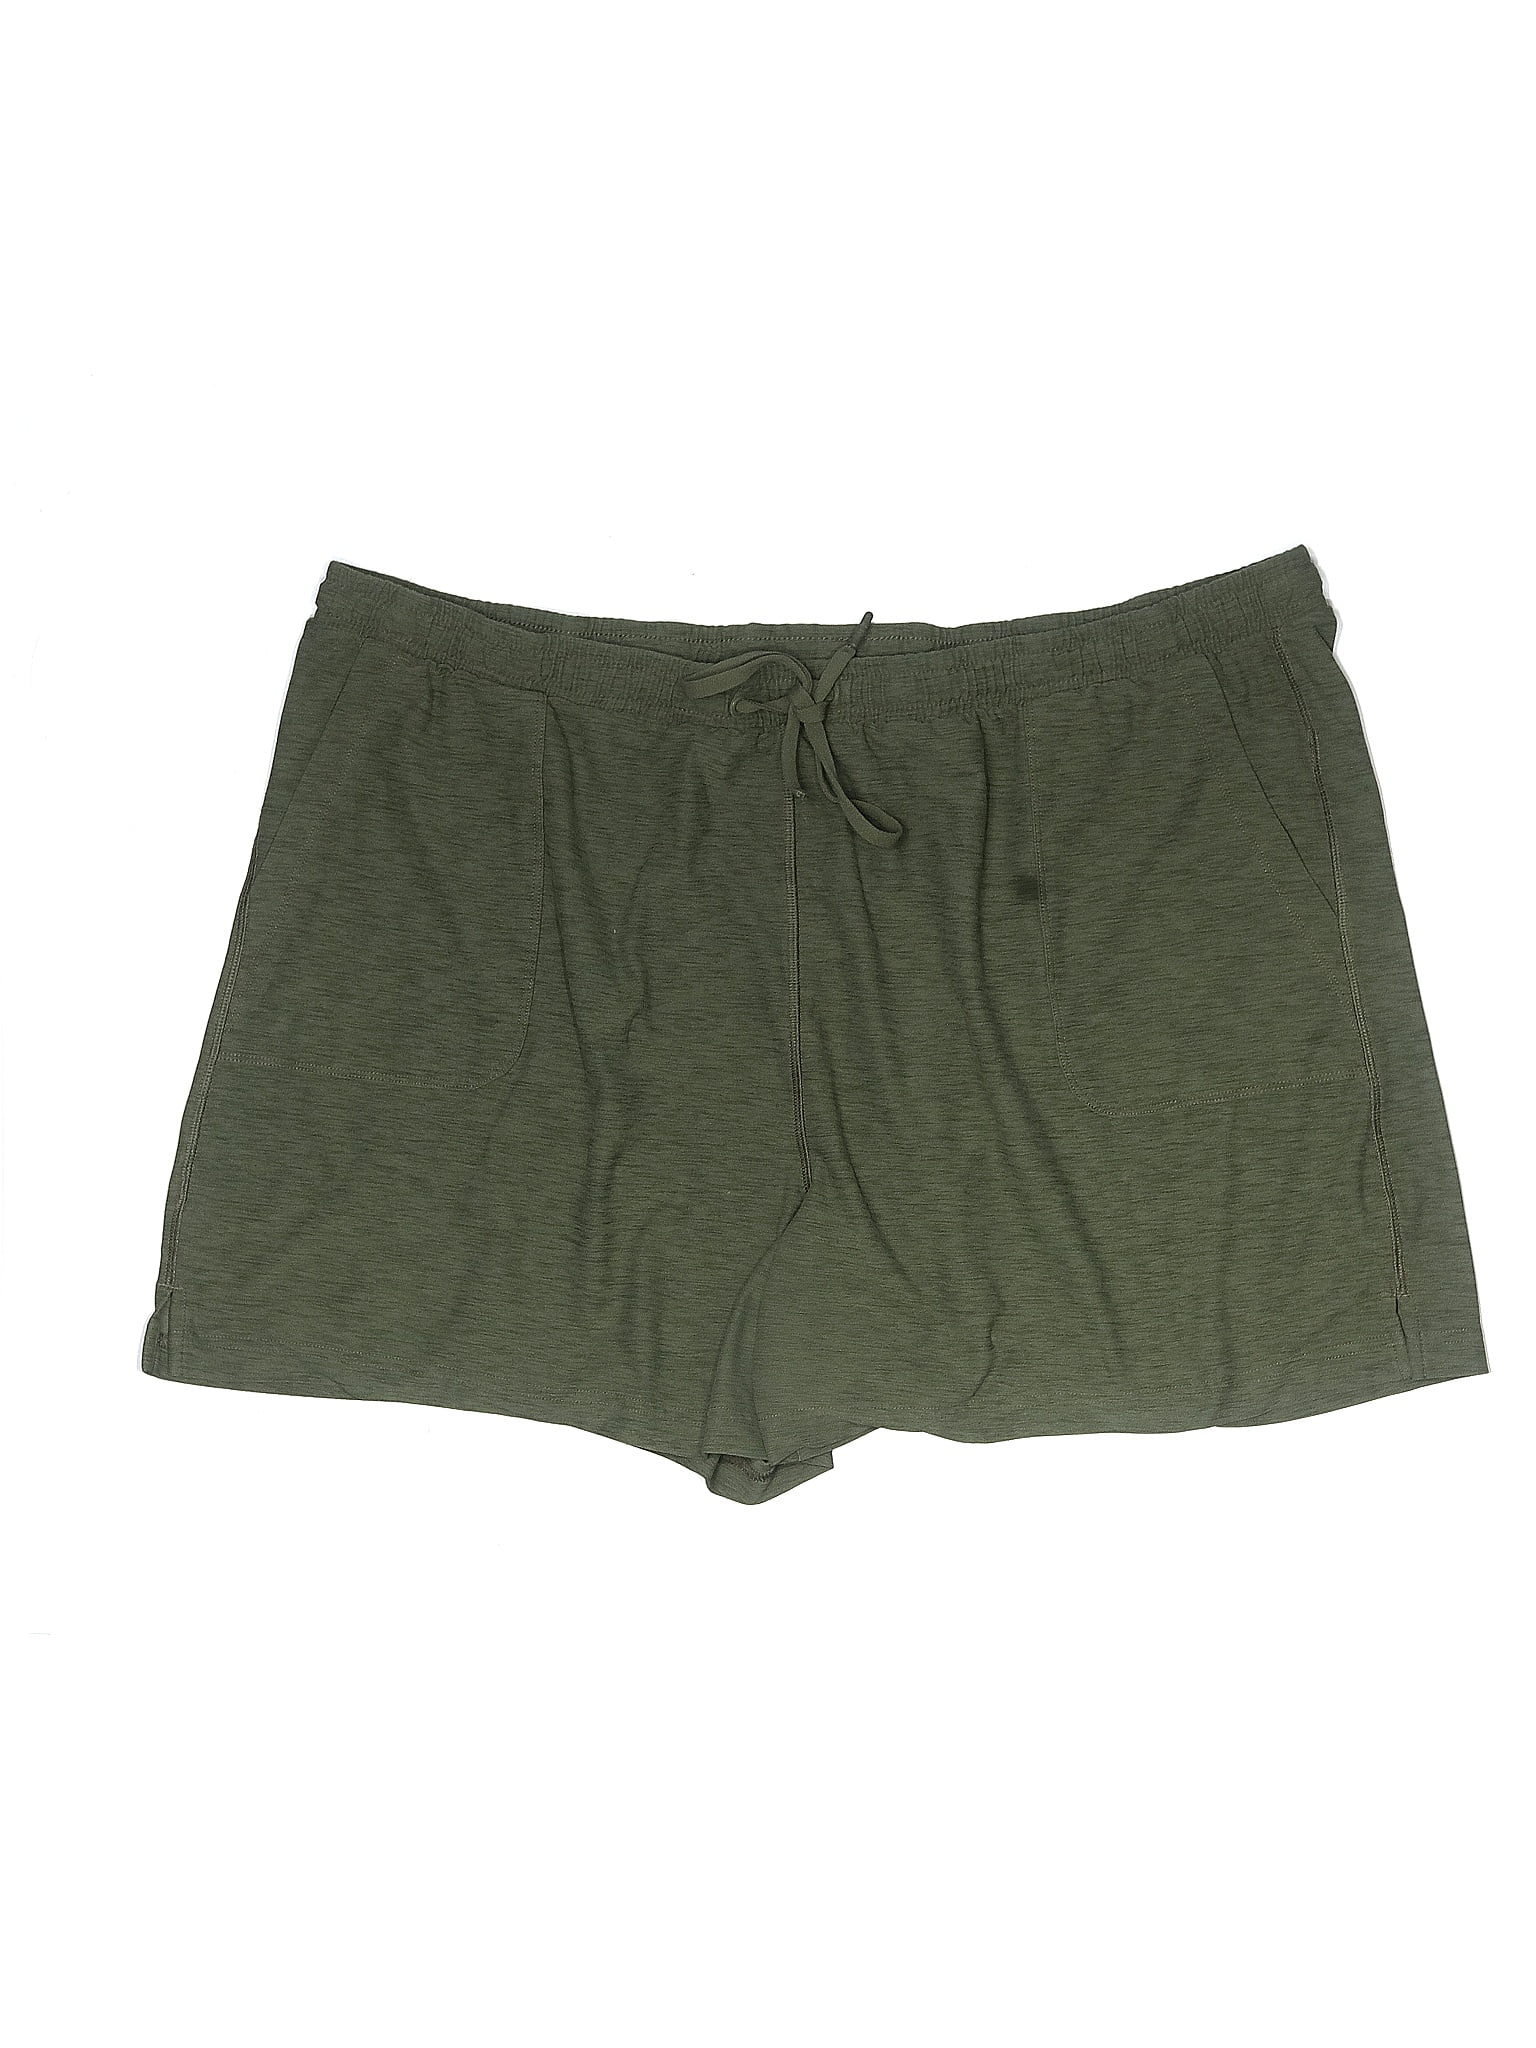 Ava & Viv Green Athletic Sweat Pants for Women